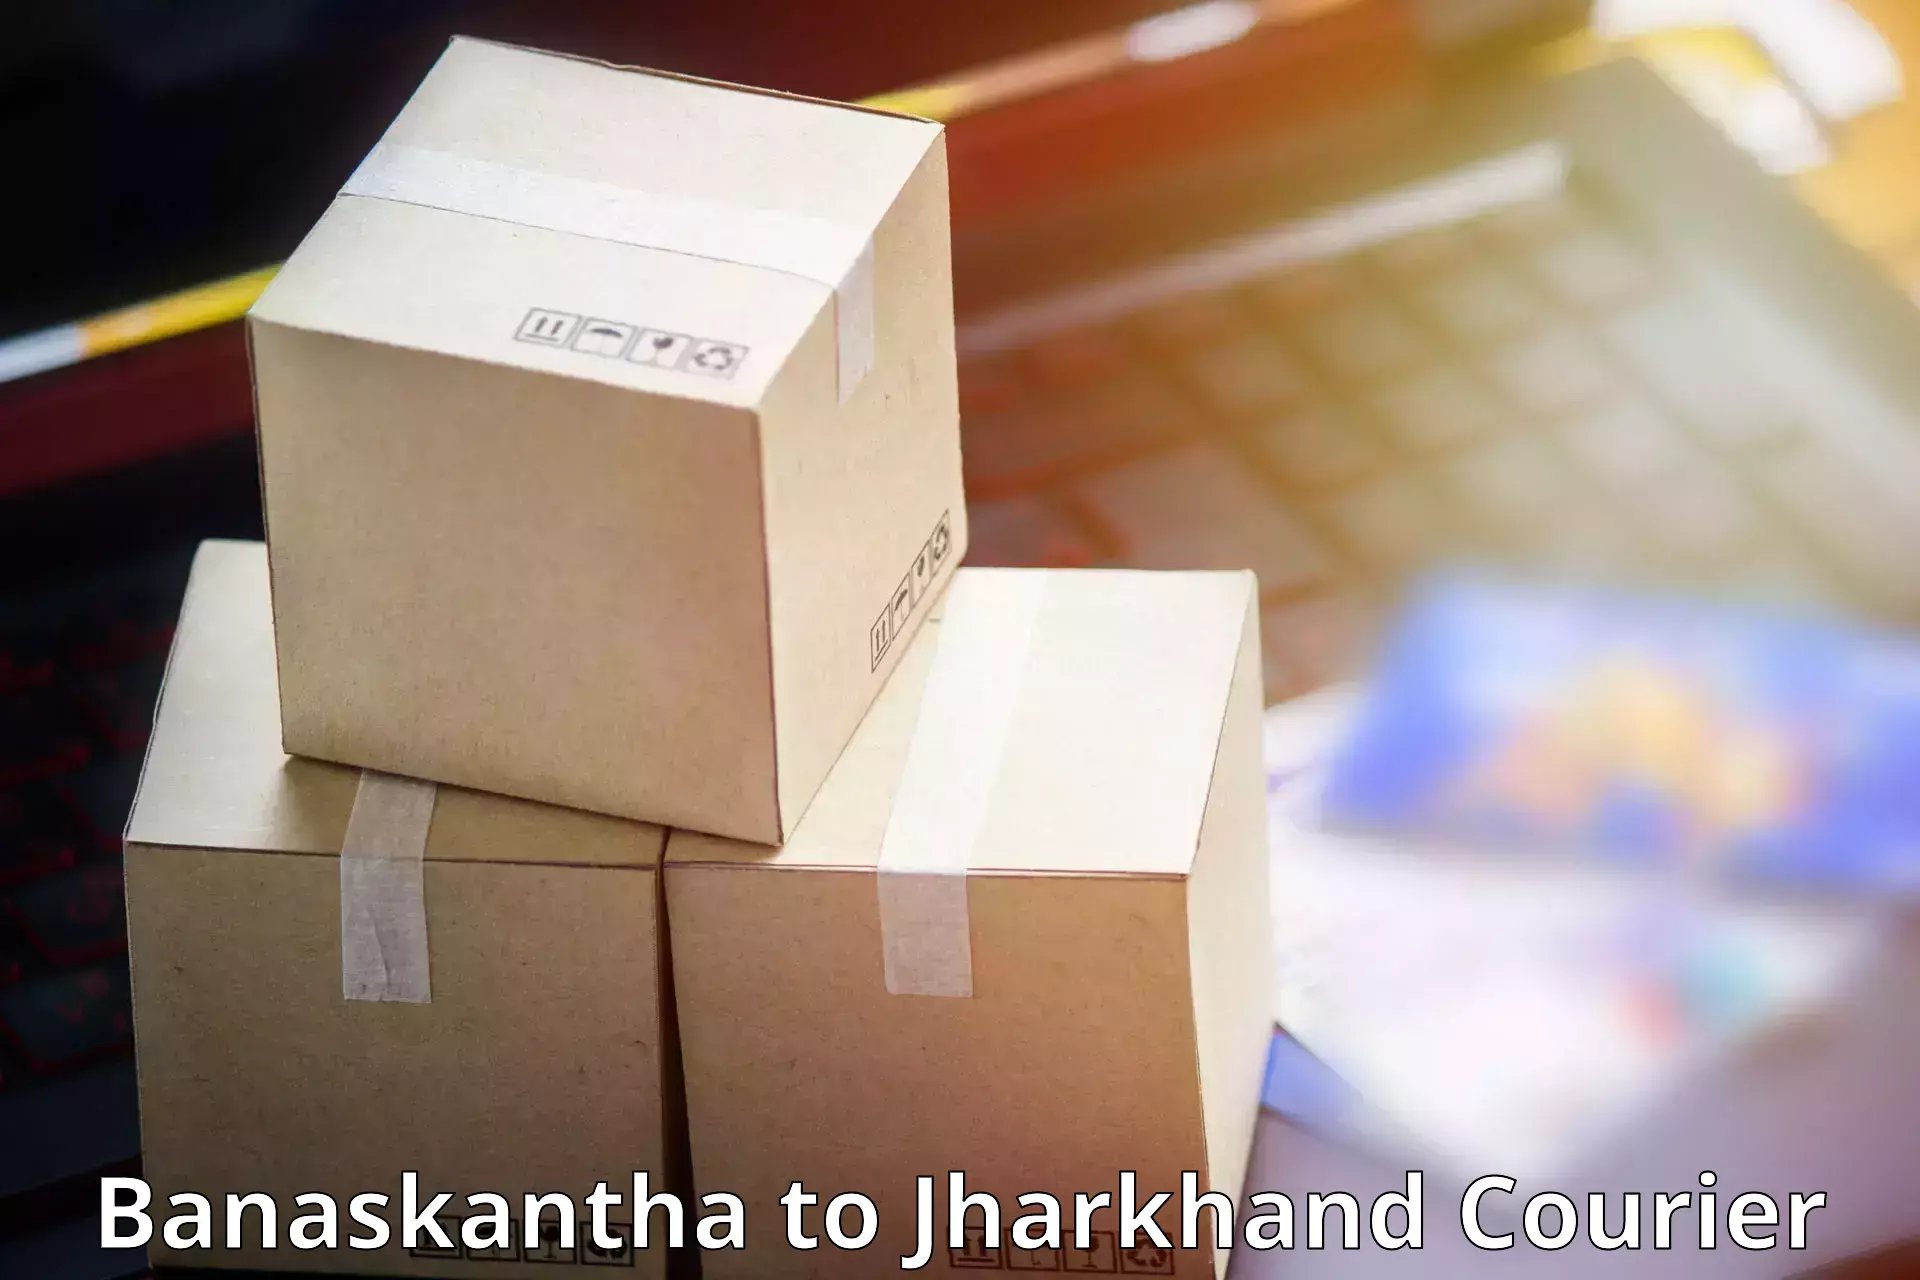 Multi-national courier services Banaskantha to Godda